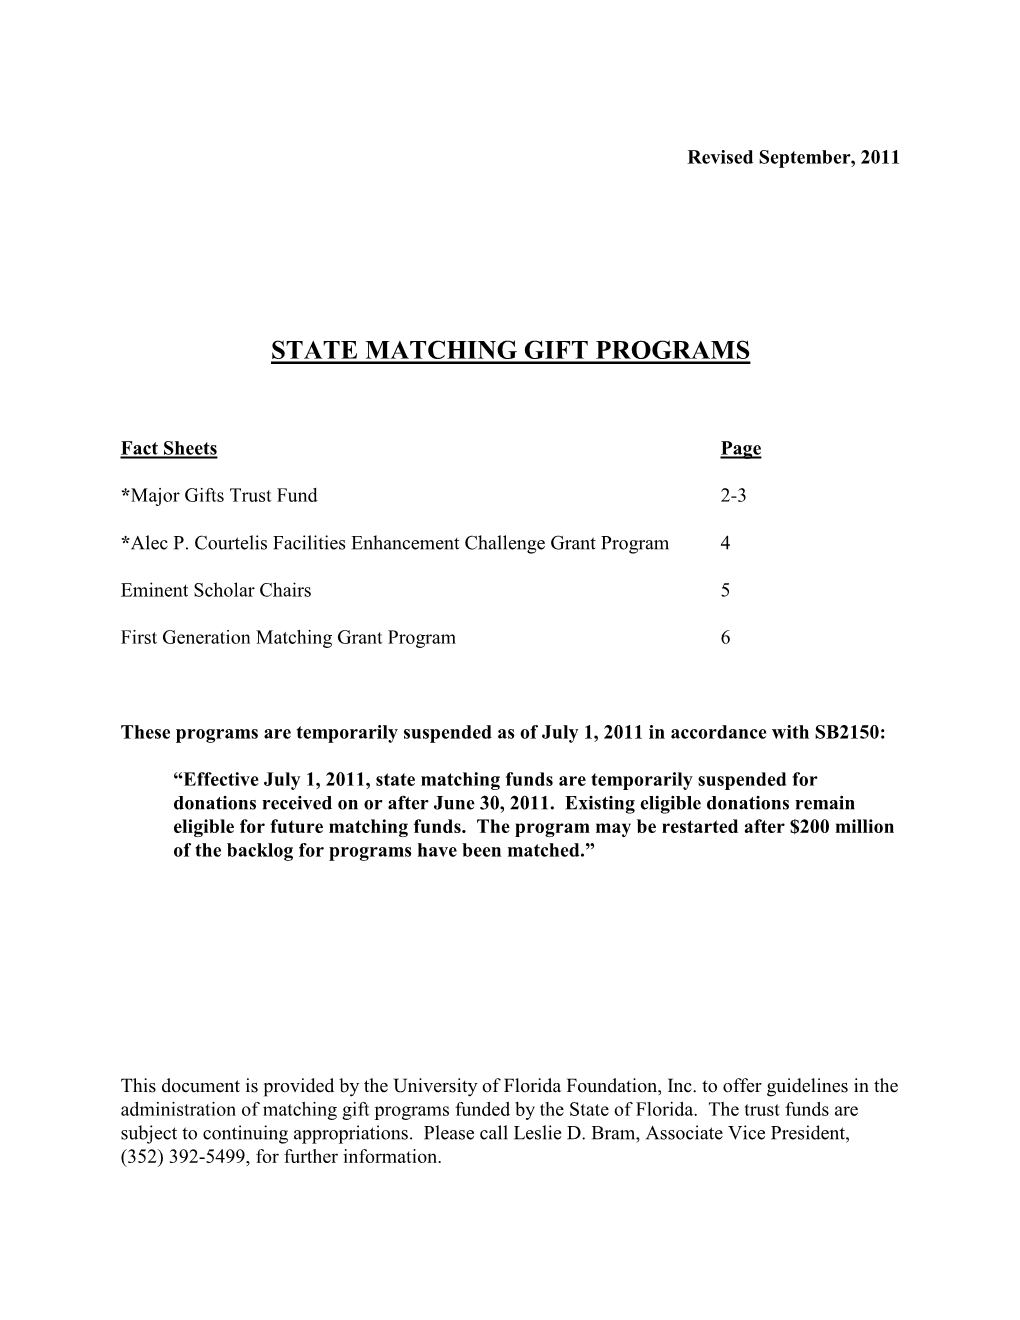 State Matching Gift Program Information